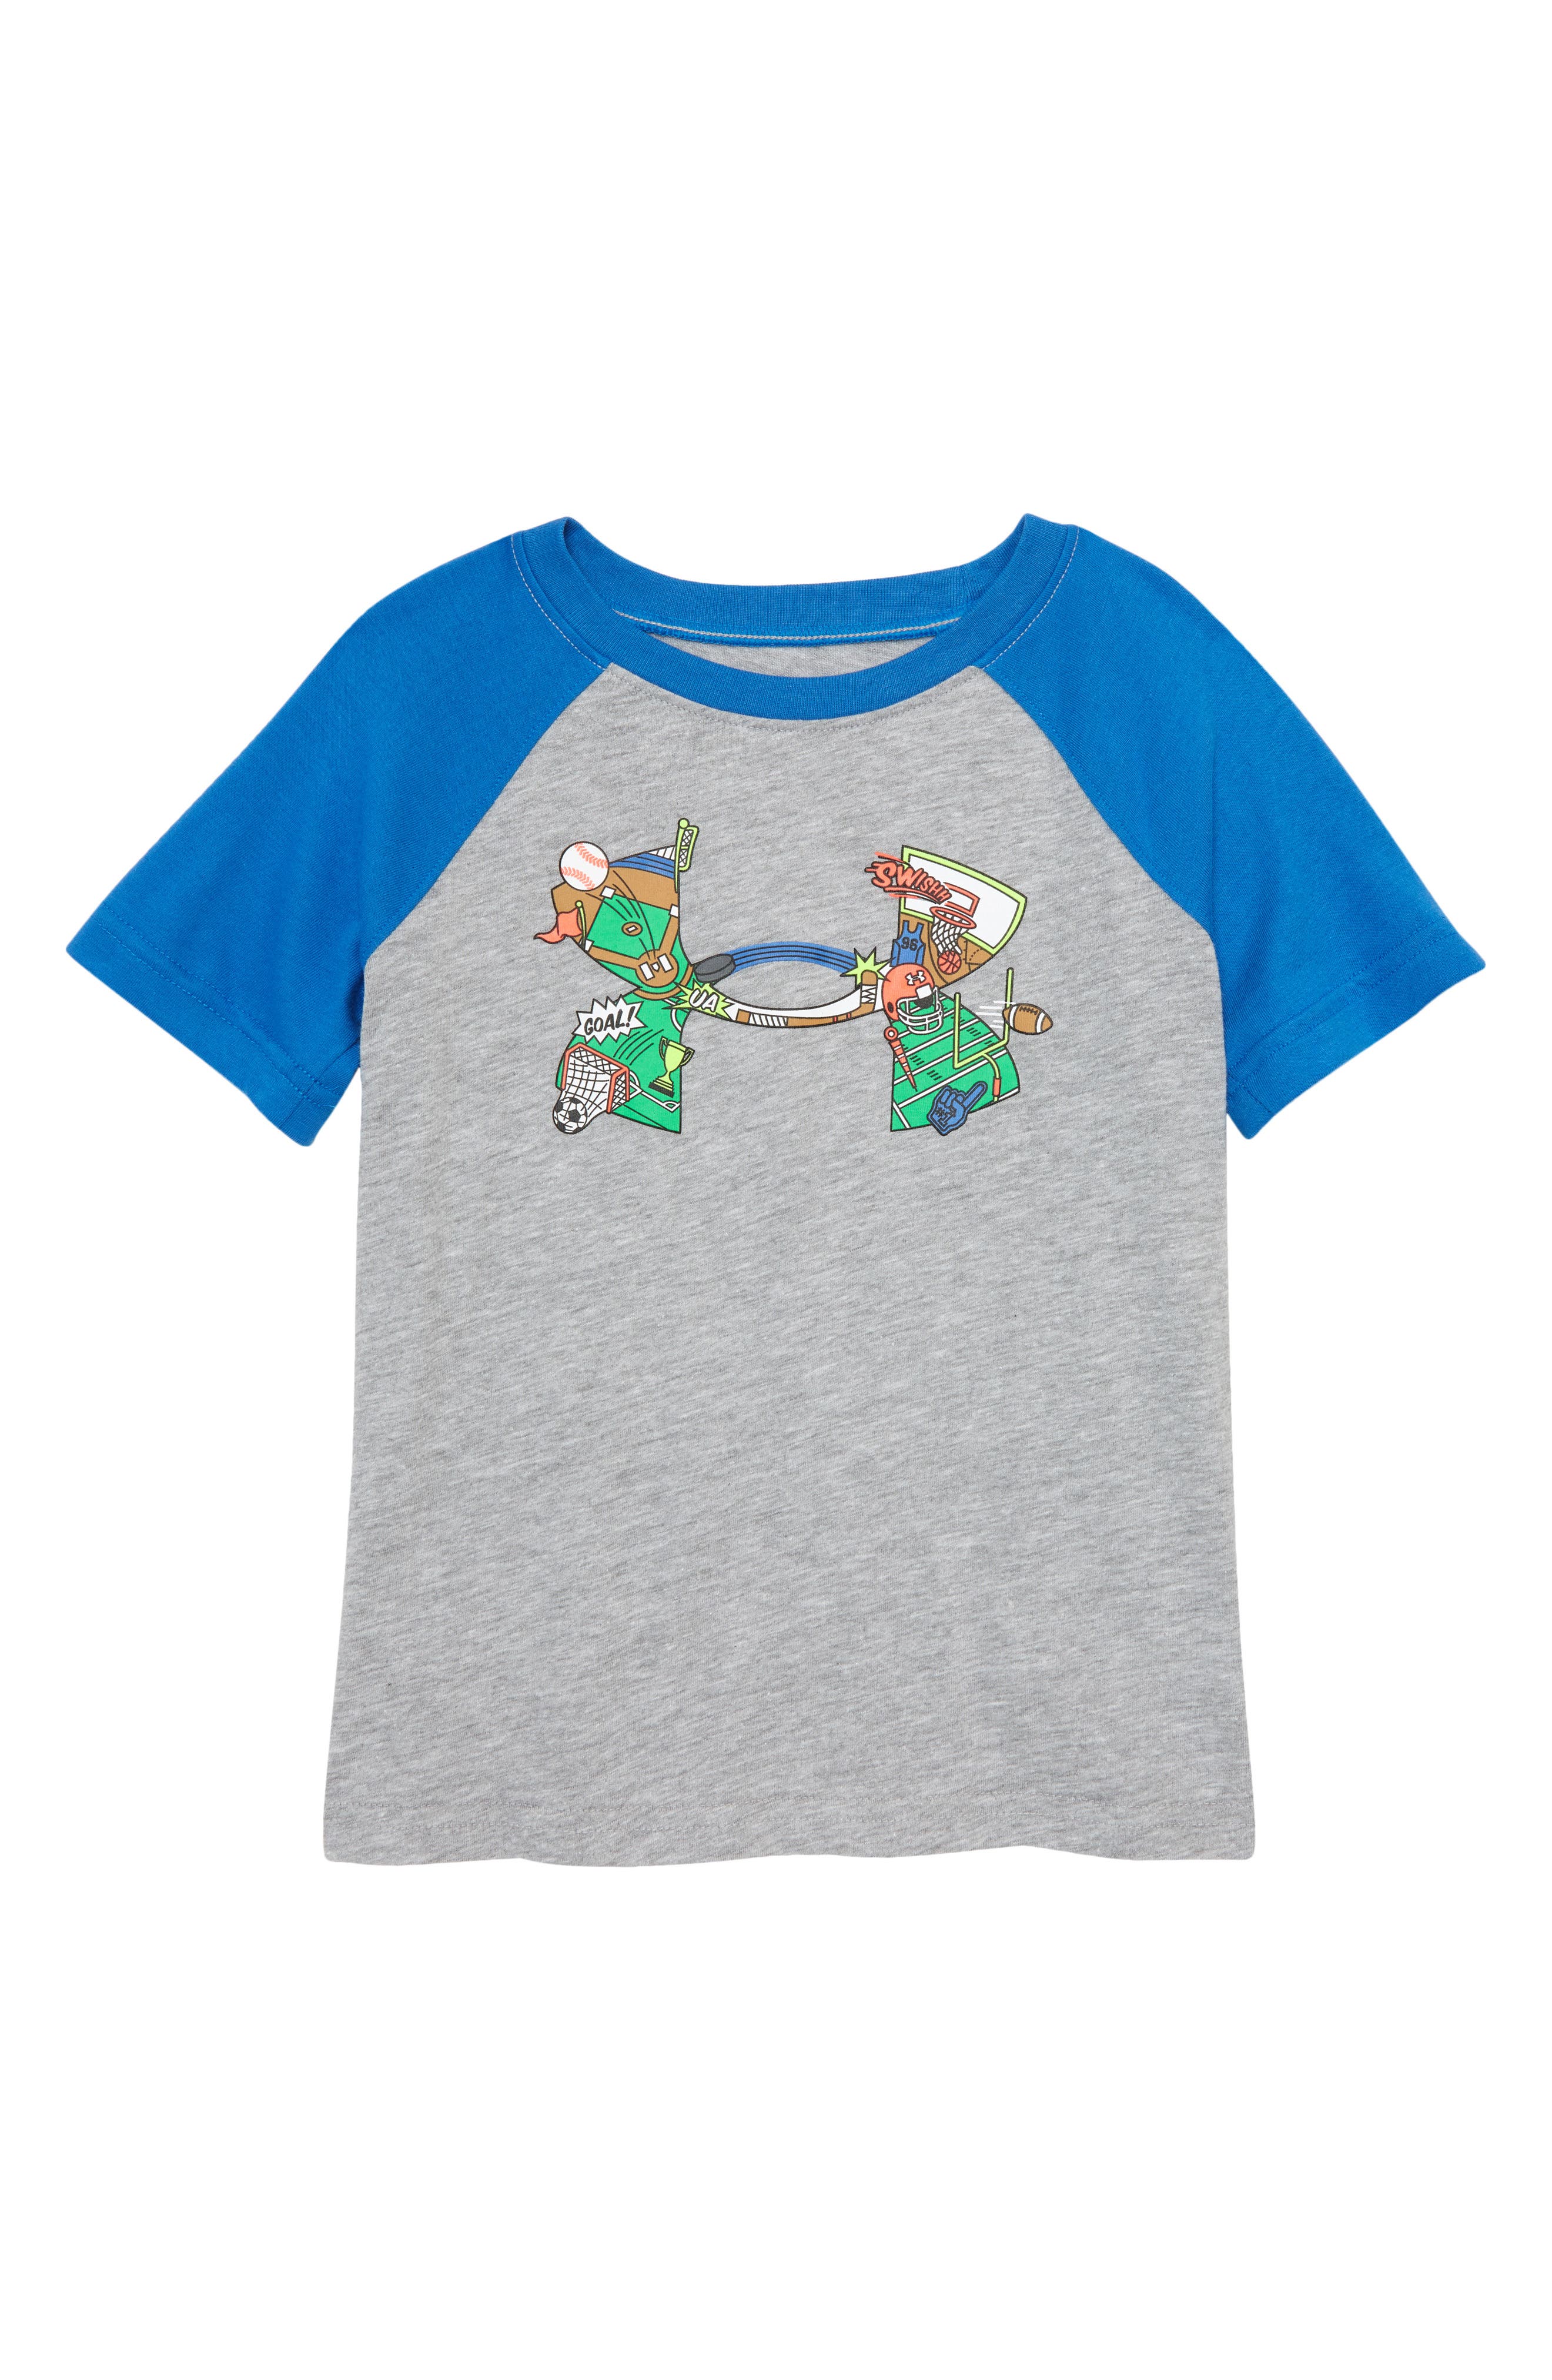 Baseball King Kids Tee Shirt Pick Size & Color 2T XL 